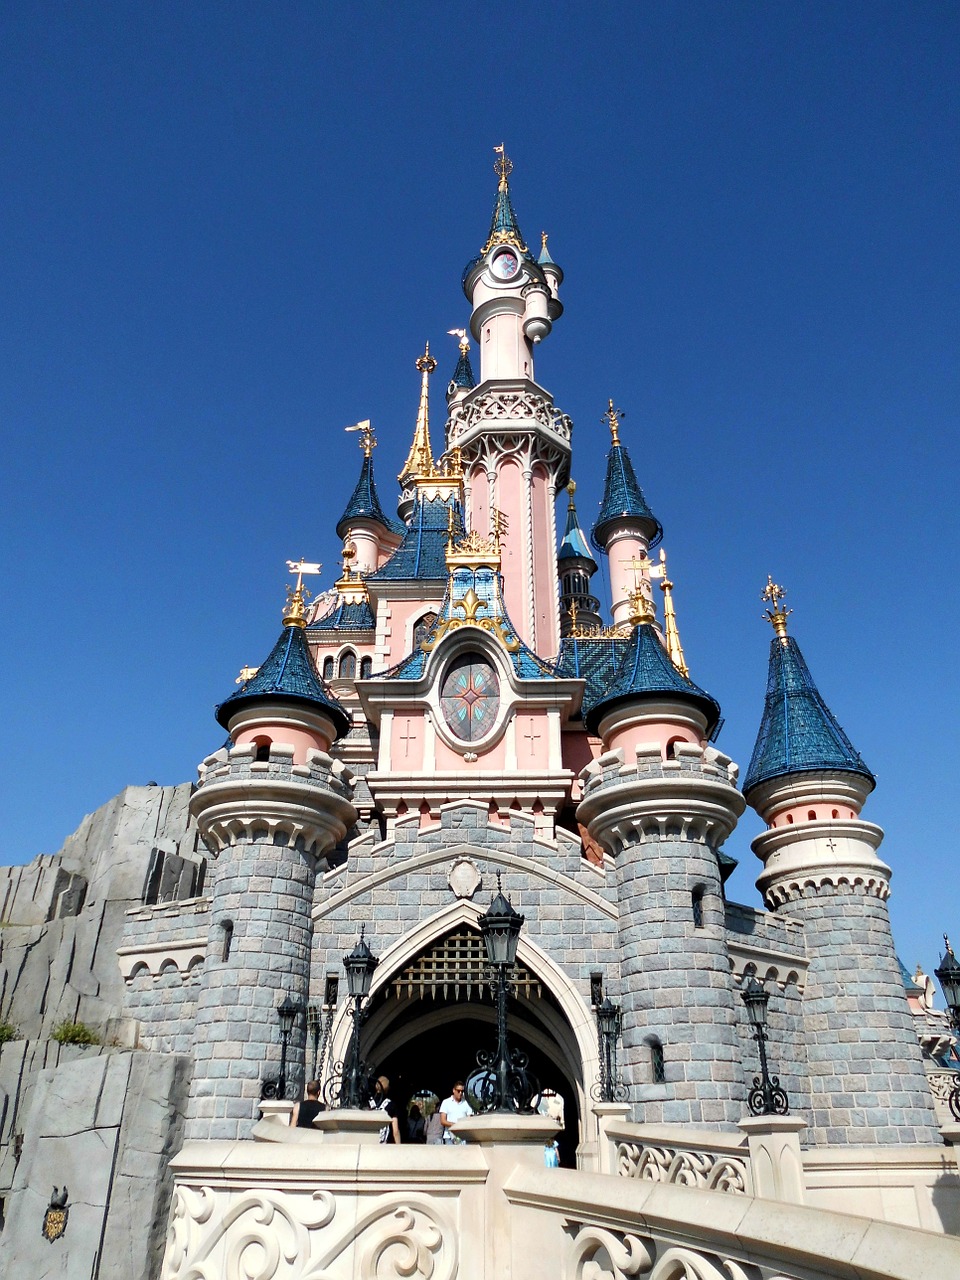 1,271 Disneyland Paris Castle Stock Photos - Free & Royalty-Free Stock  Photos from Dreamstime